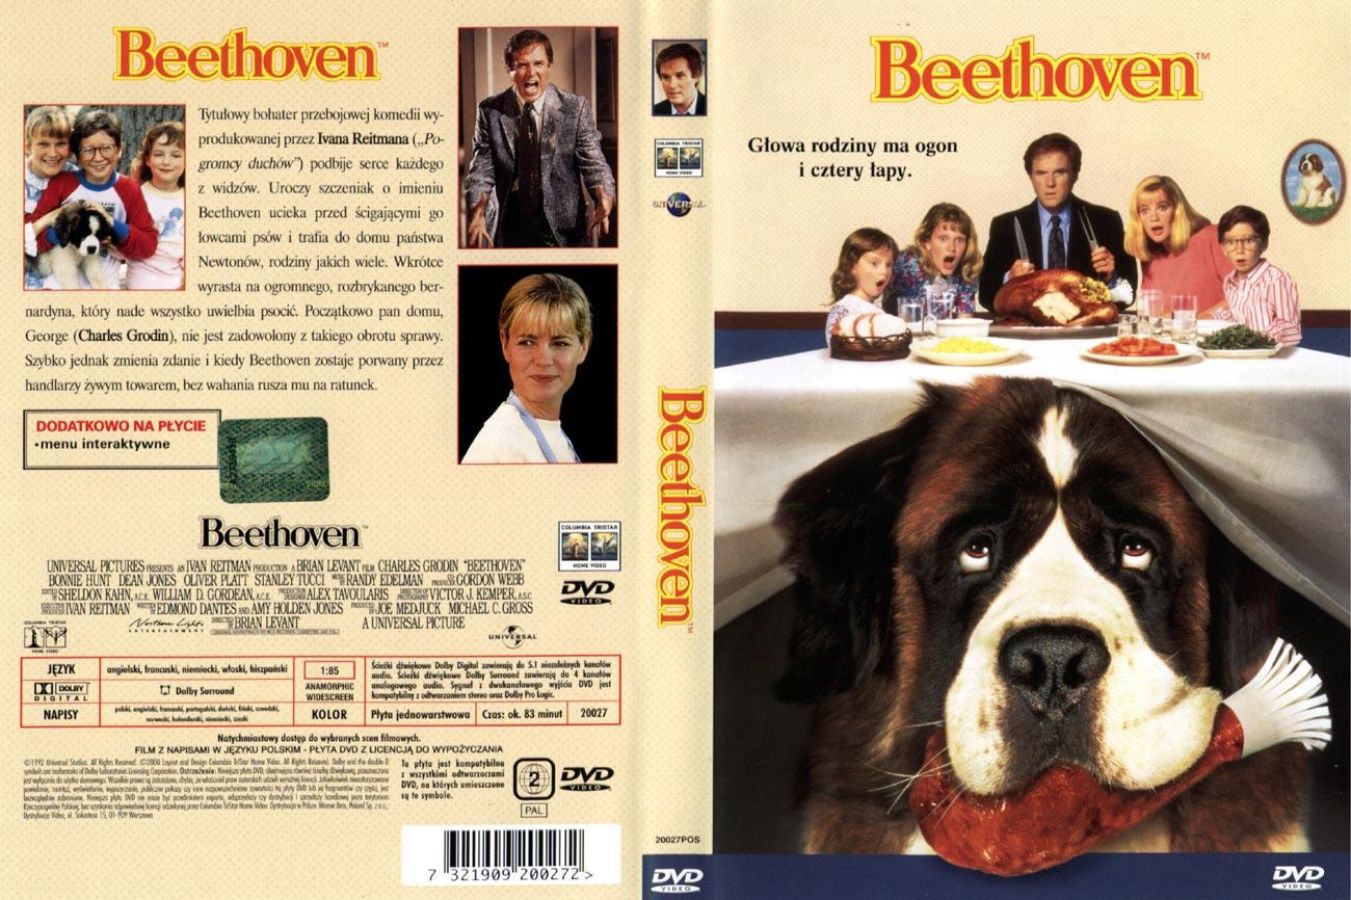 filmy ZAGRANICZNE - DVD Beethoven.jpg